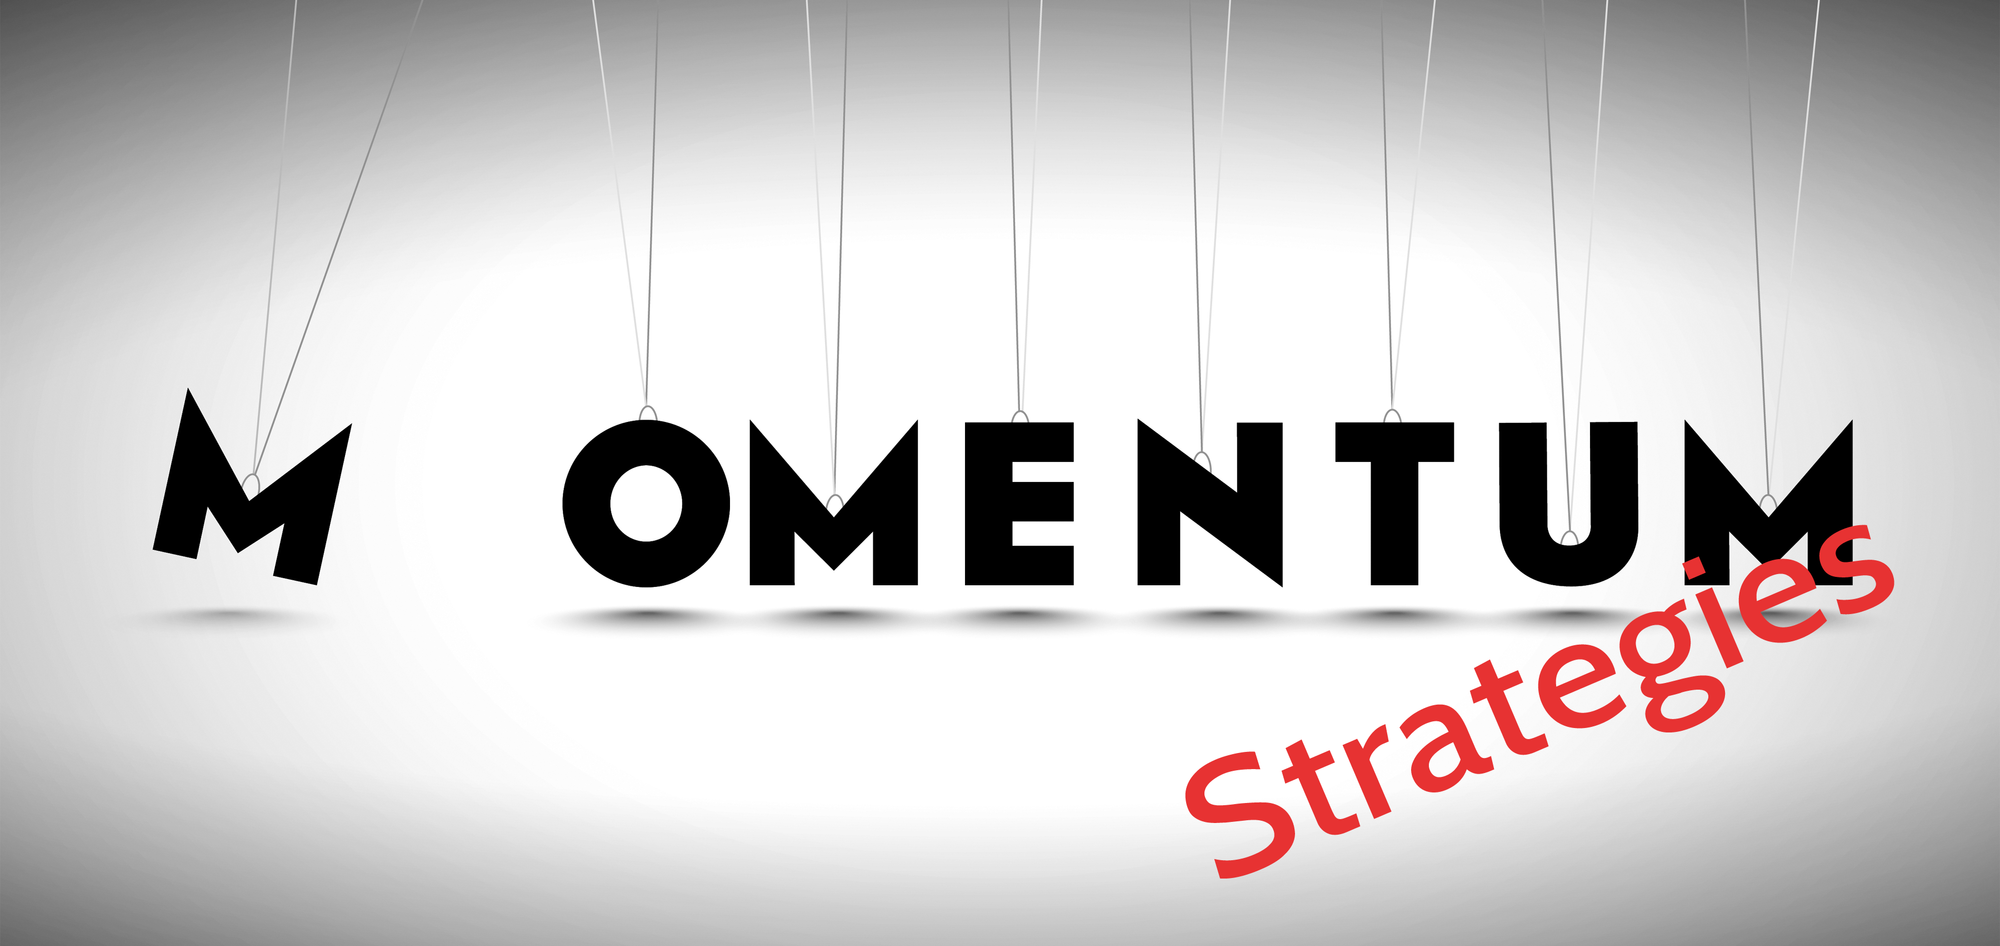 How Do I Define My Momentum Trading Strategy?